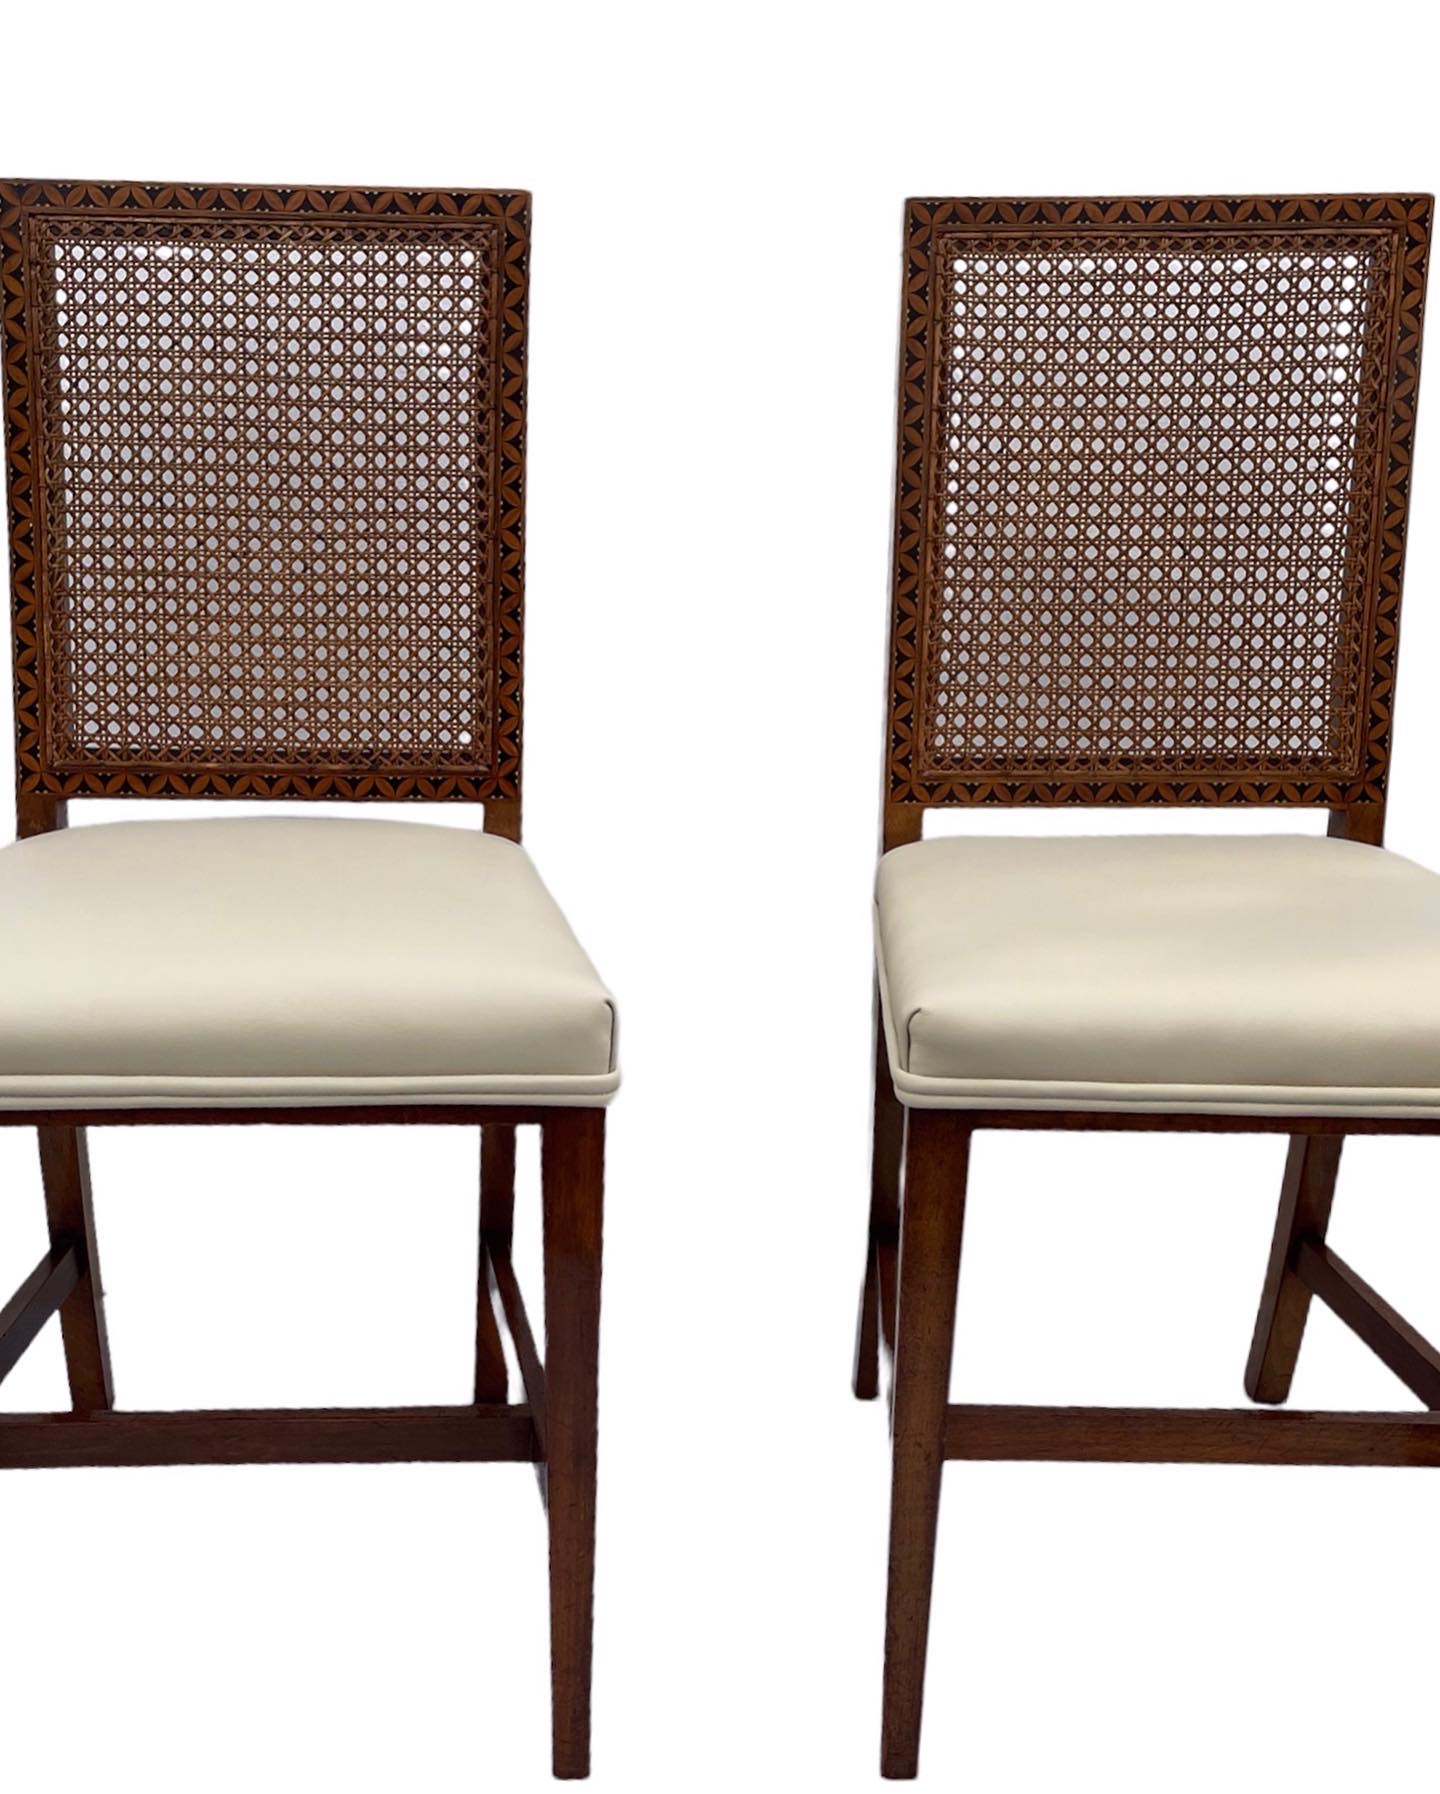 Pair of Art Deco Chairs - Poirot Art Deco Furnishings